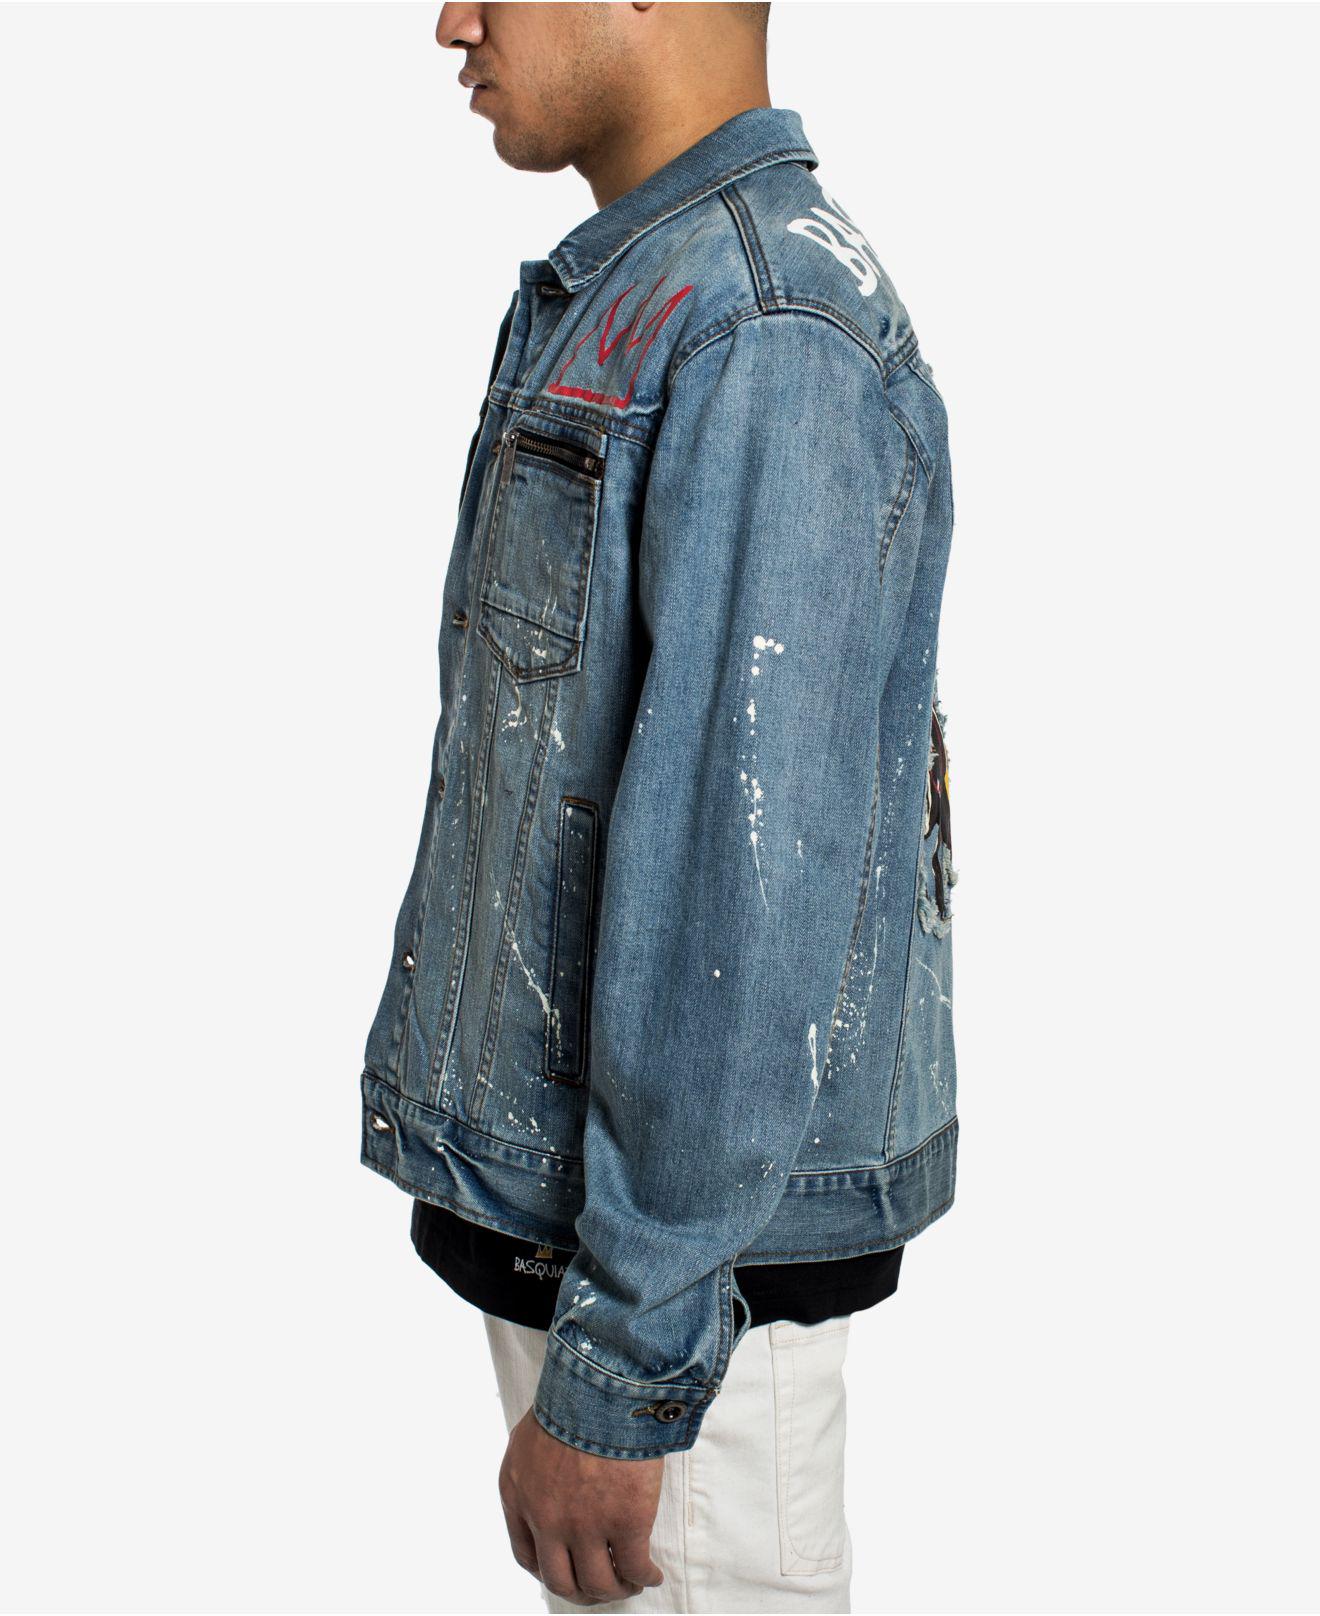 Lyst - Sean John Basquiat Pez Denim Jacket, Created For Macy's in Blue ...